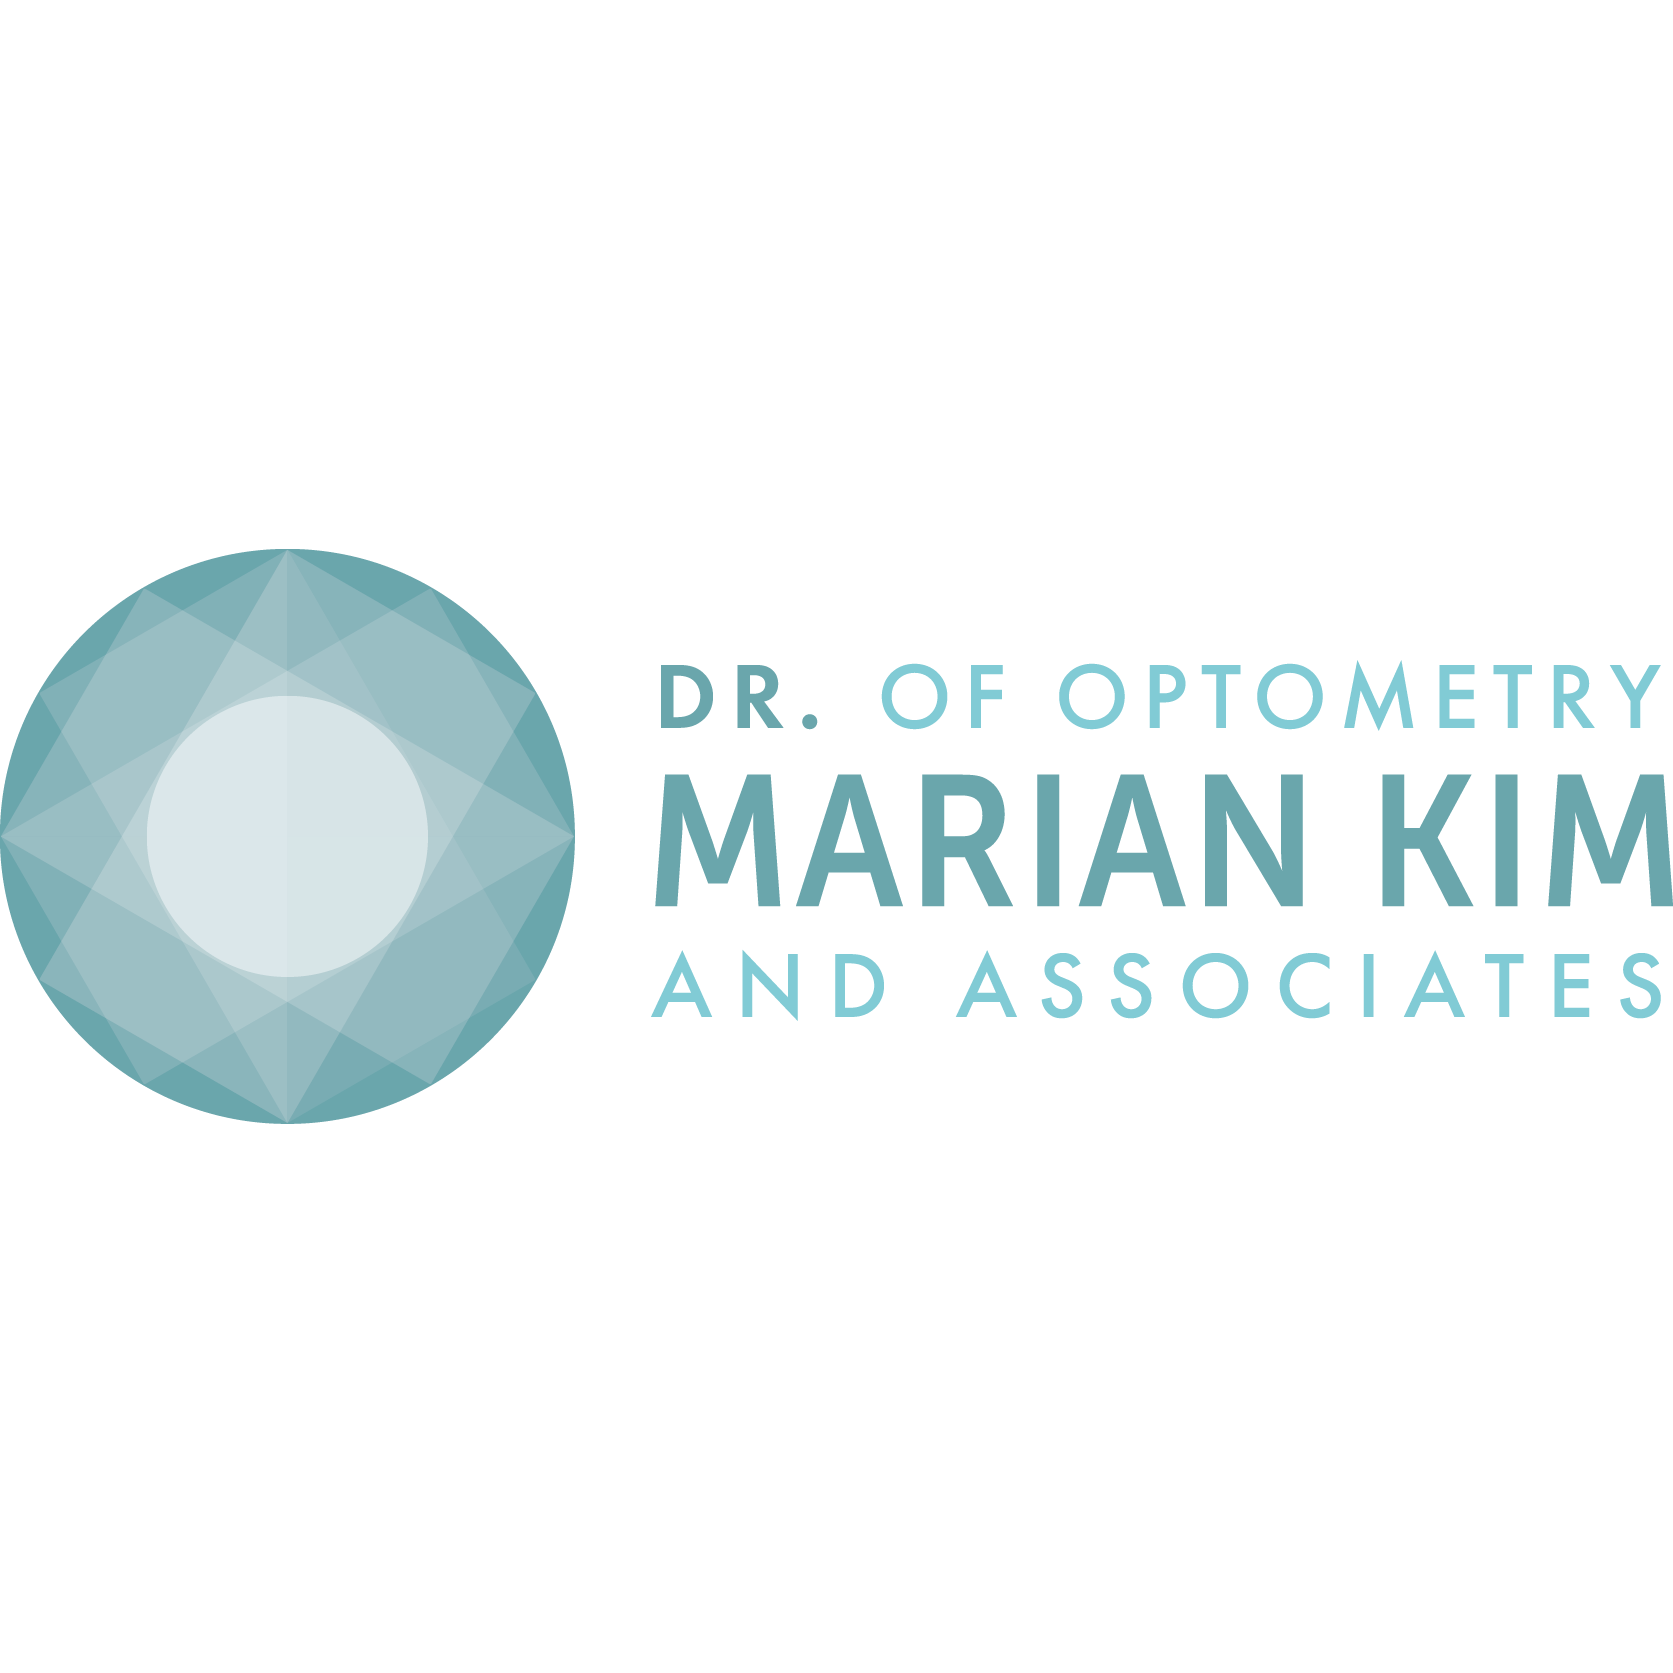 Dr. Marian Kim and Associates